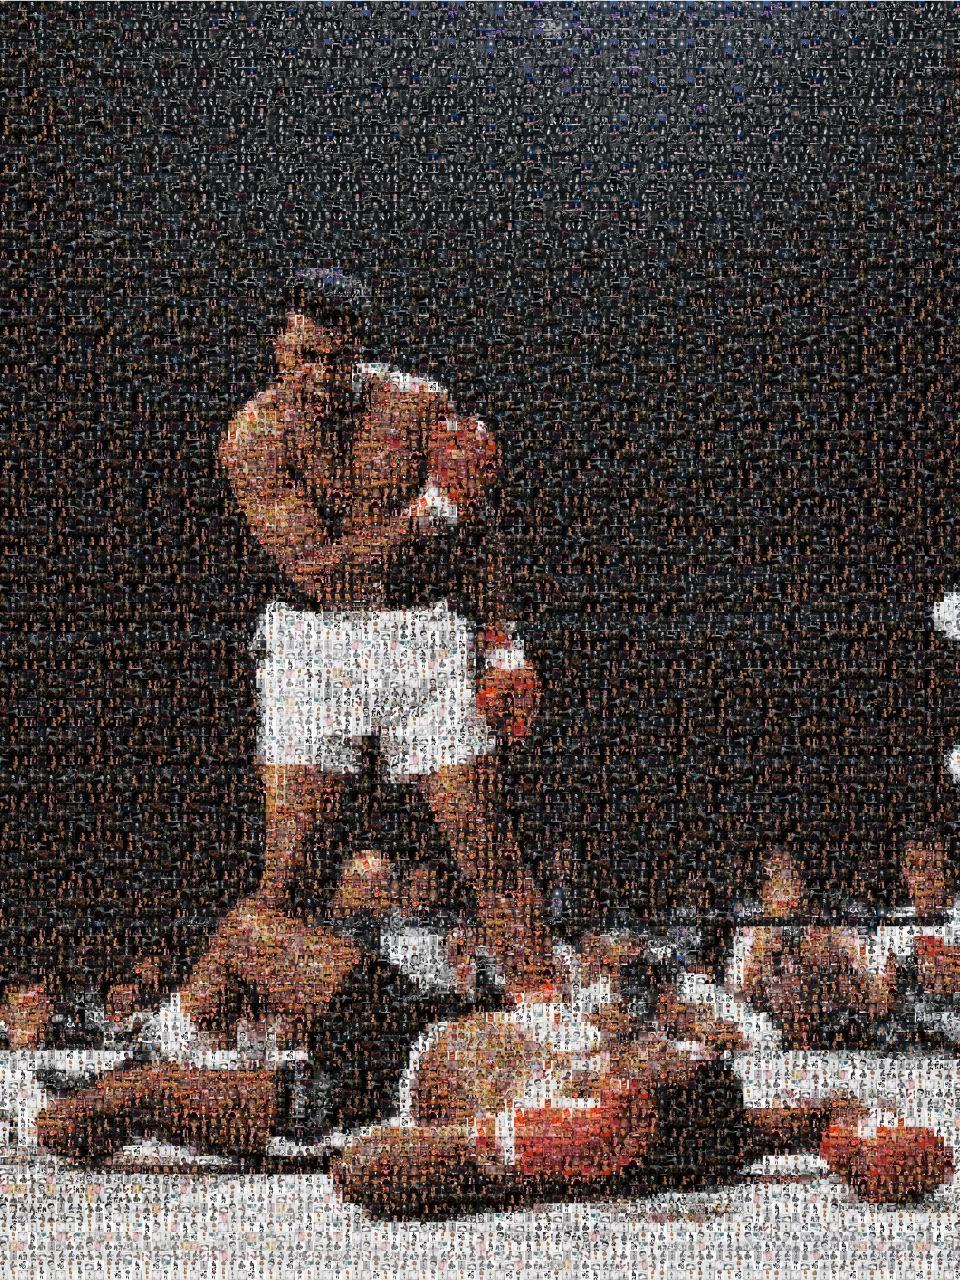 Destro Still-Life Print - "Ali" Muhammad Ali Portrait 24x36  Boxing Photography Pop Art Photograph